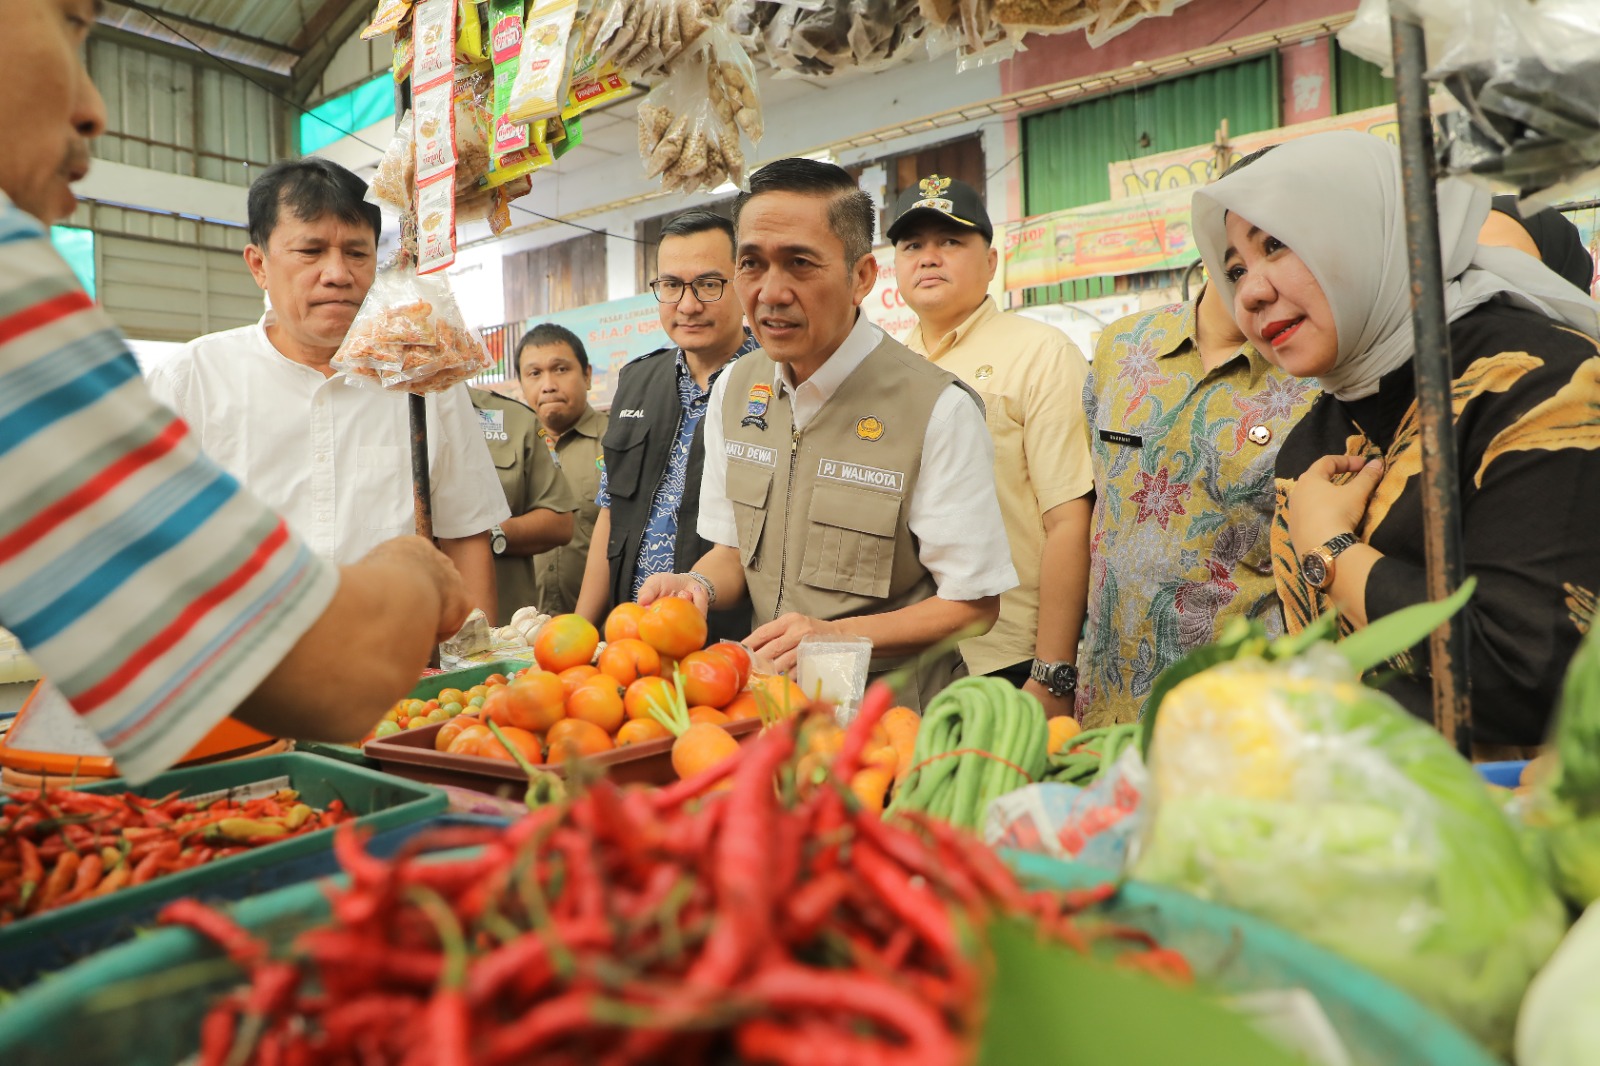 Jelang Bulan Puasa, Ratu Dewa Memastikan Stok dan Harga Sembako Stabil di Pasar Tradisional Kota Palembang 